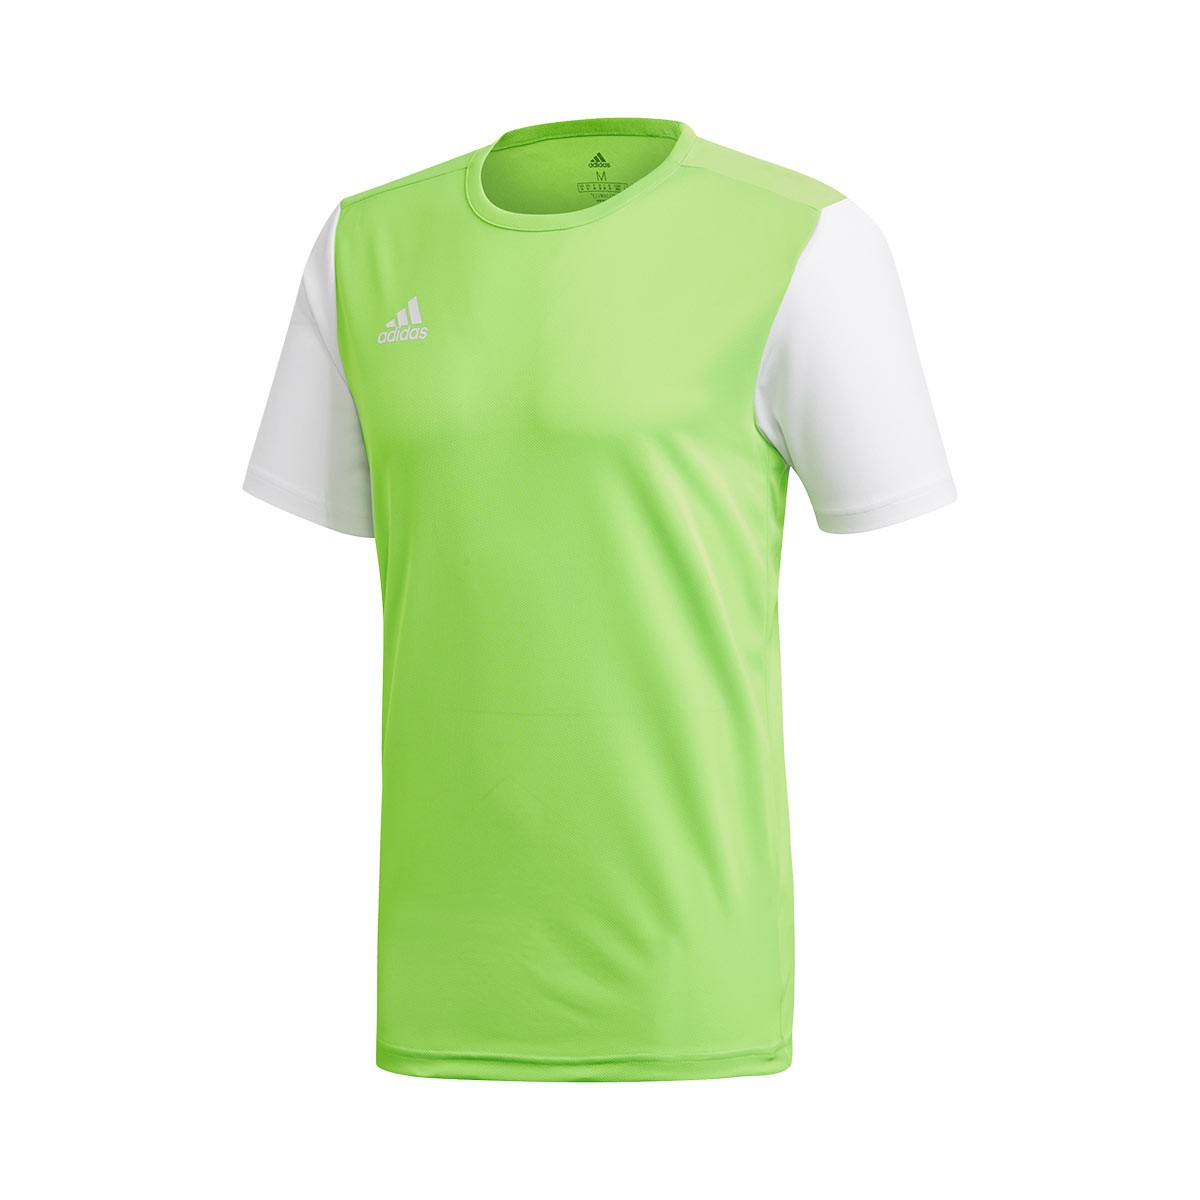 Jersey adidas 19 Solar Green-White - Fútbol Emotion